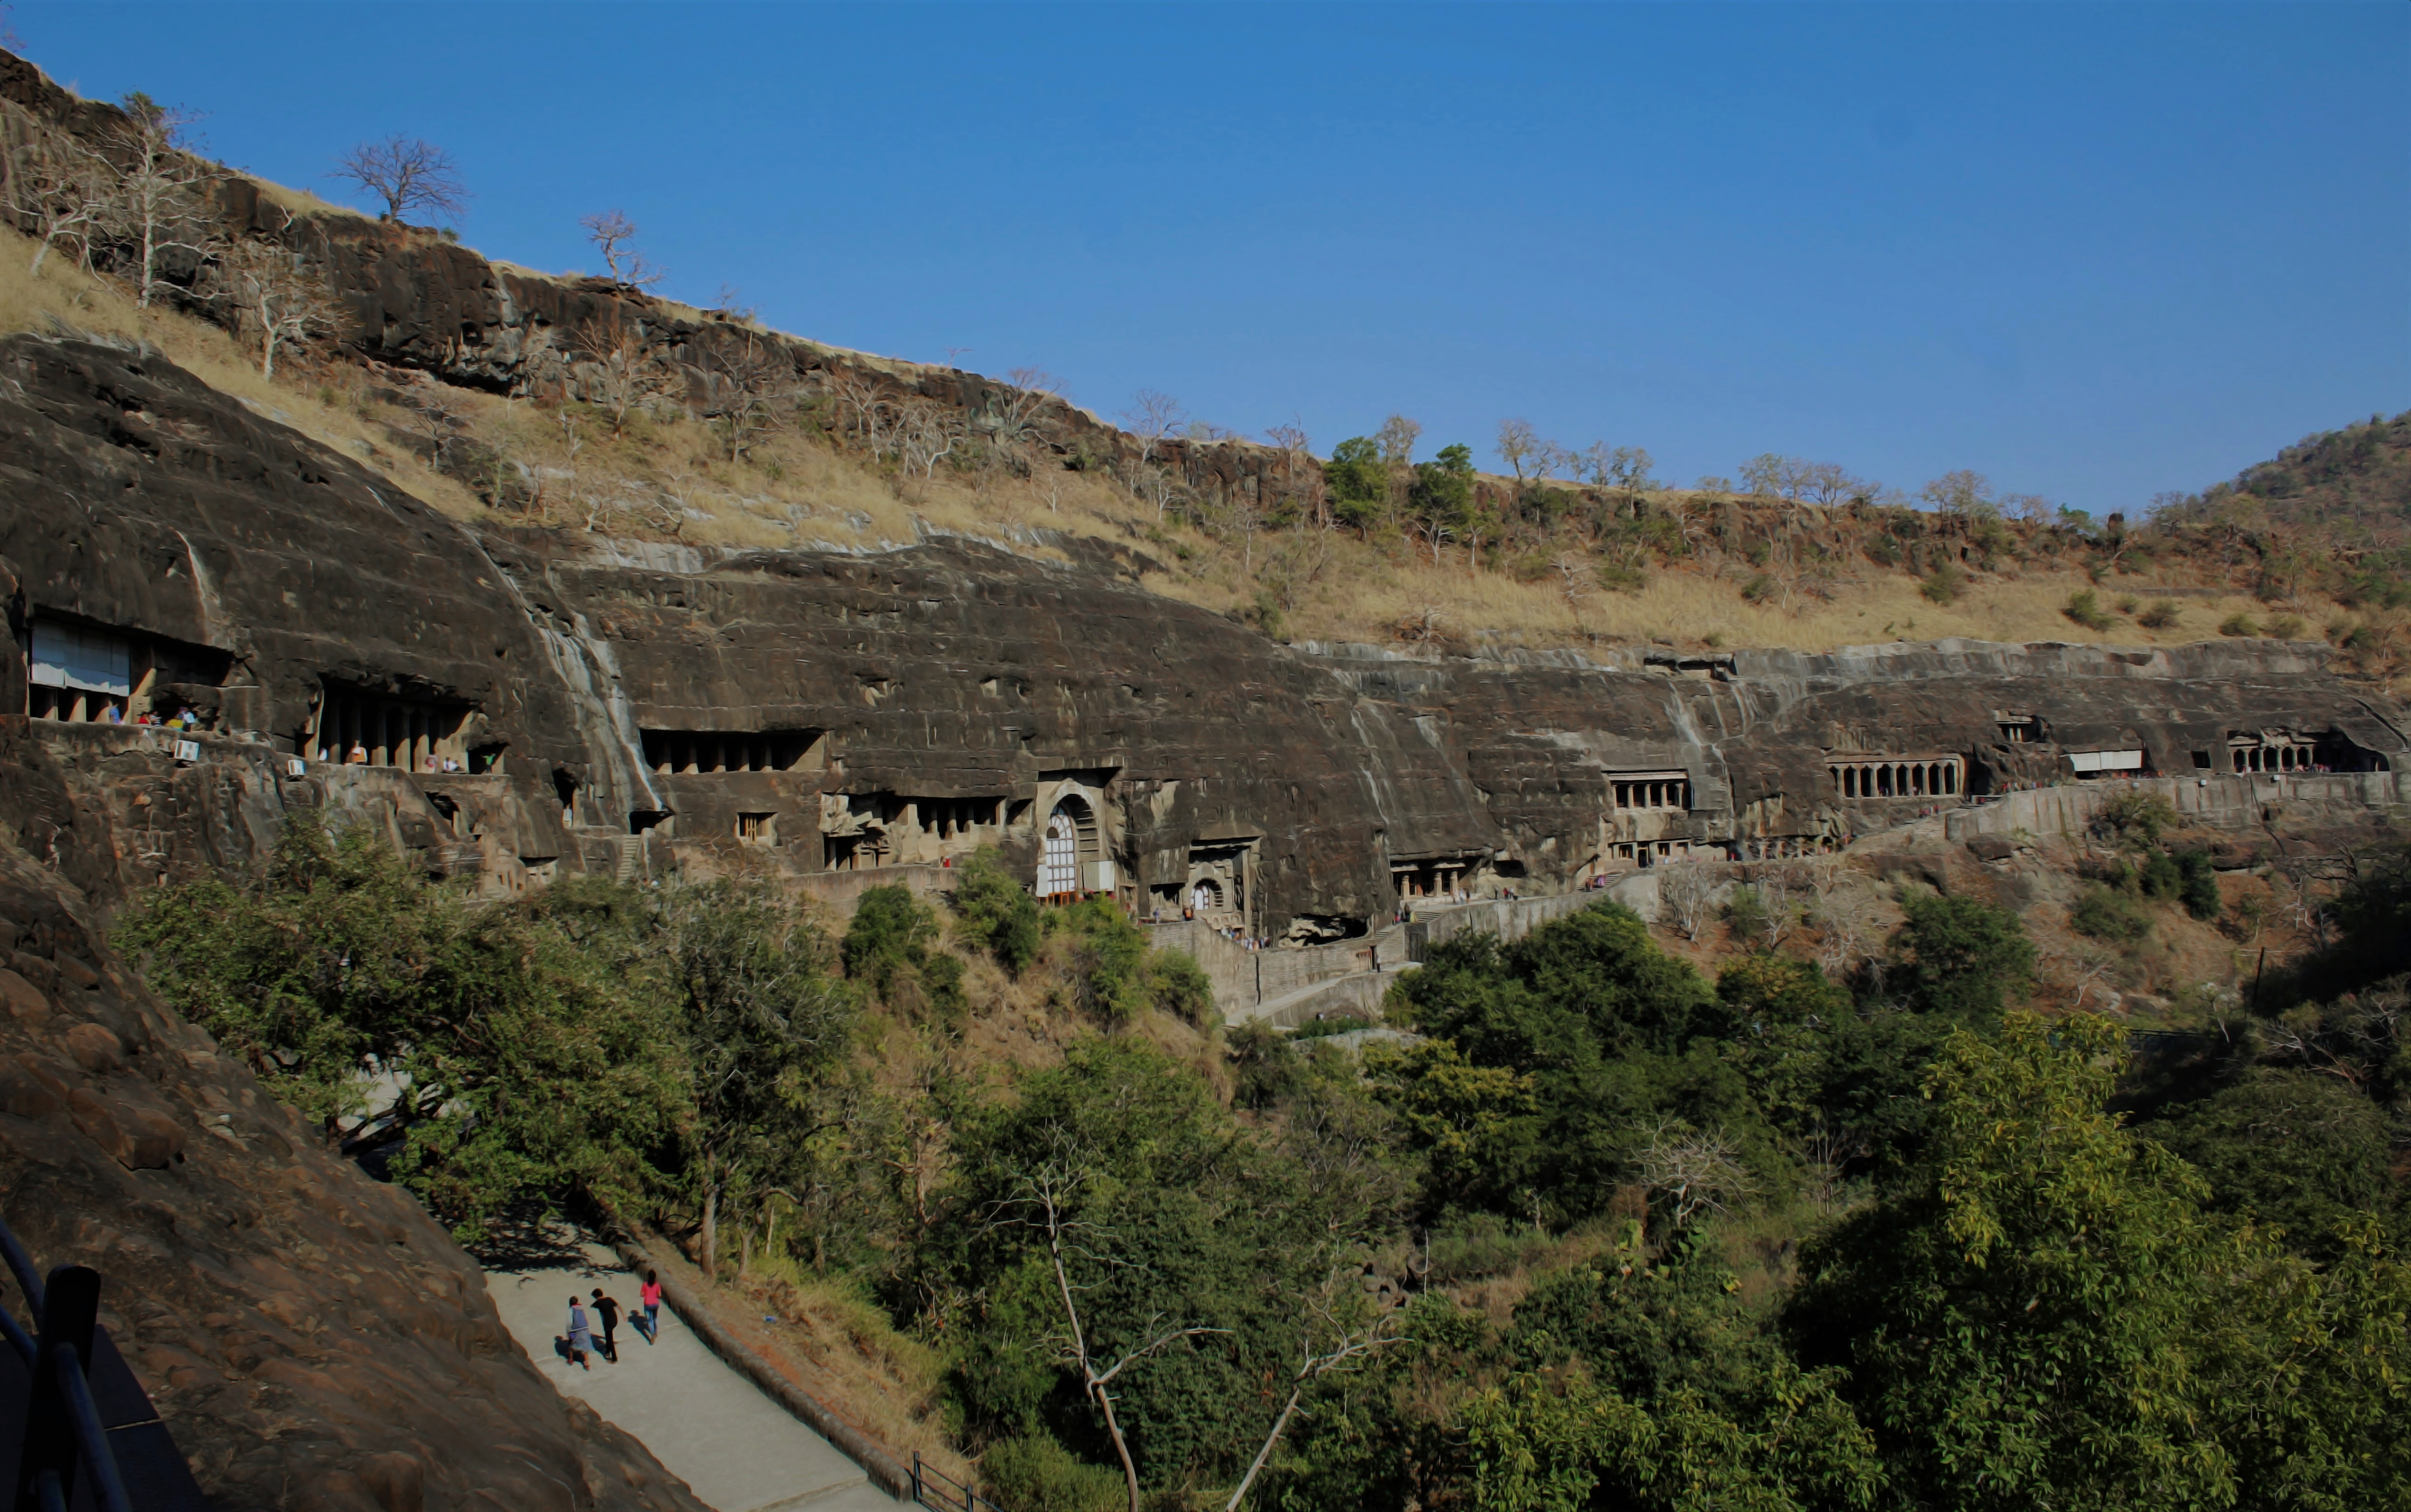 The Ajanta Caves - Arranged serially in a horse-shoe shaped Ridge